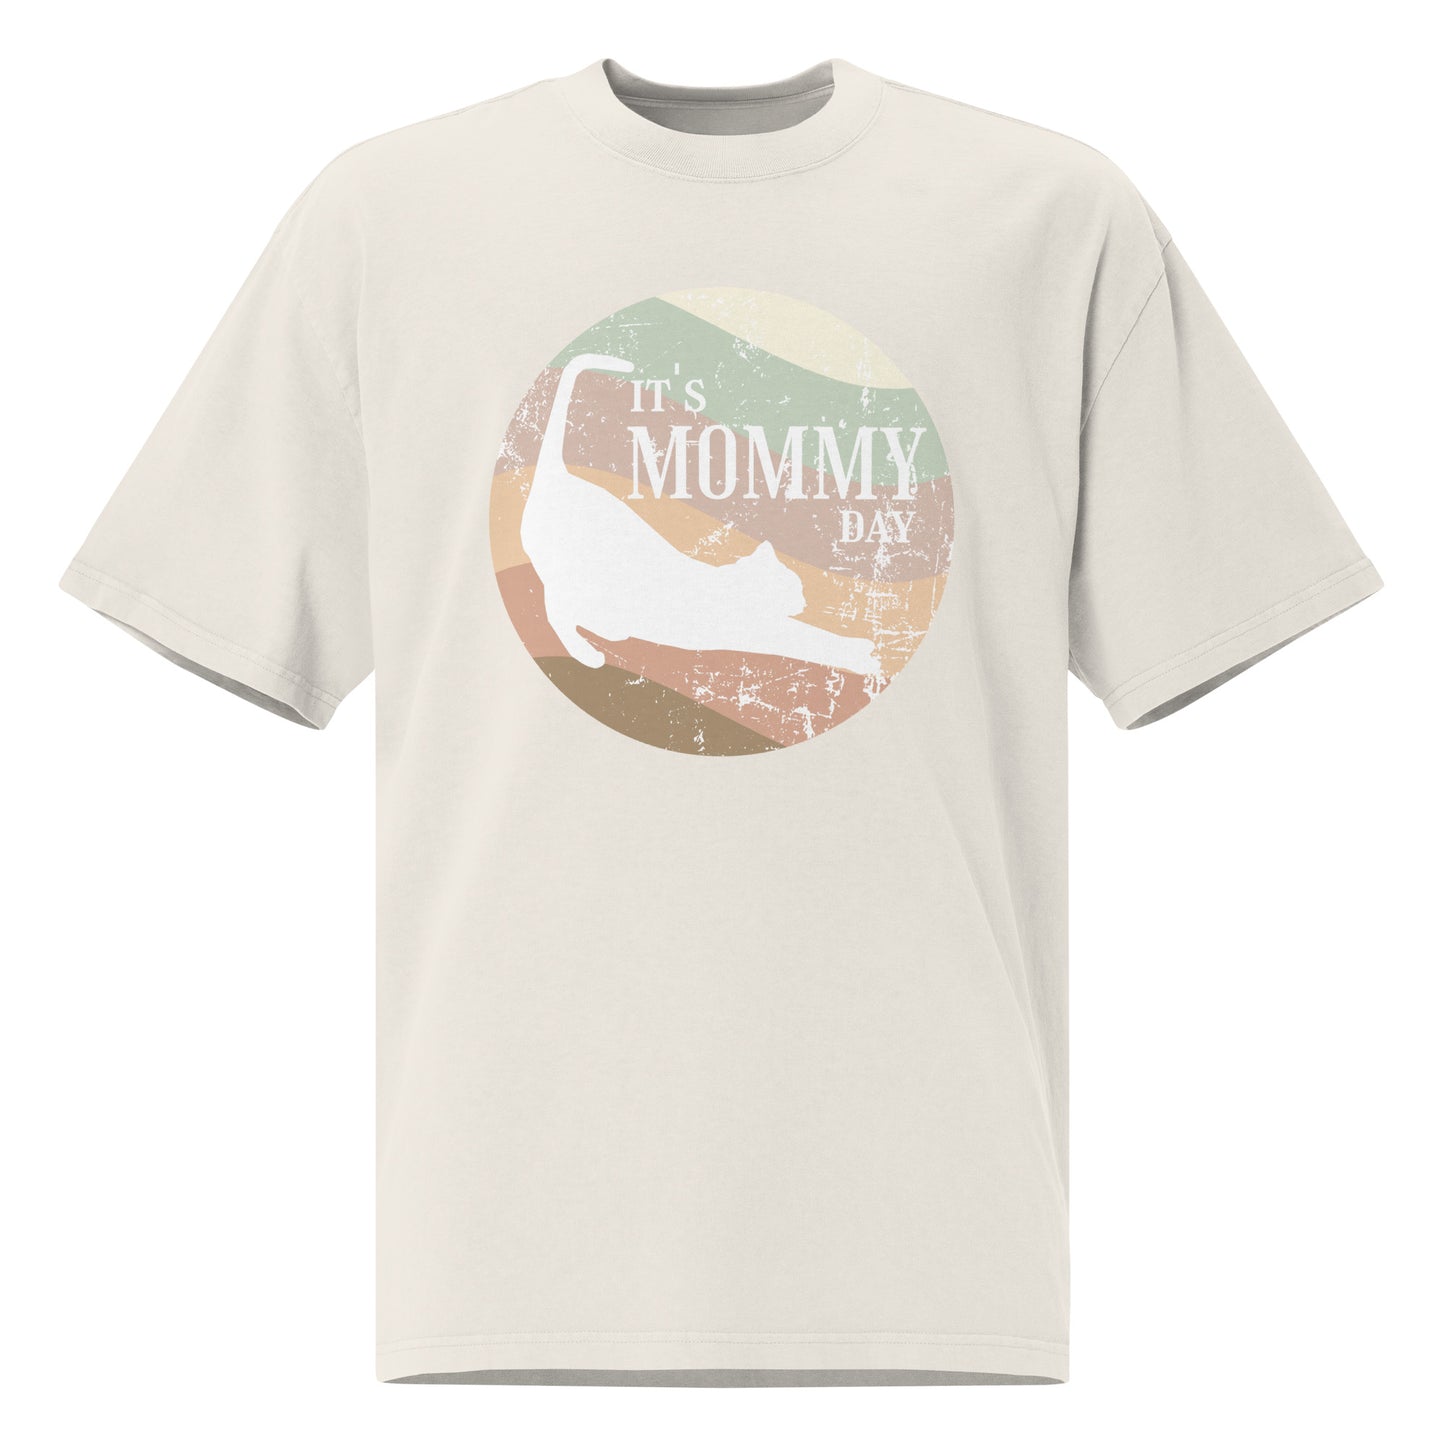 Oversized faded t-shirt Women's T-shirt Mother's Day T-shirt